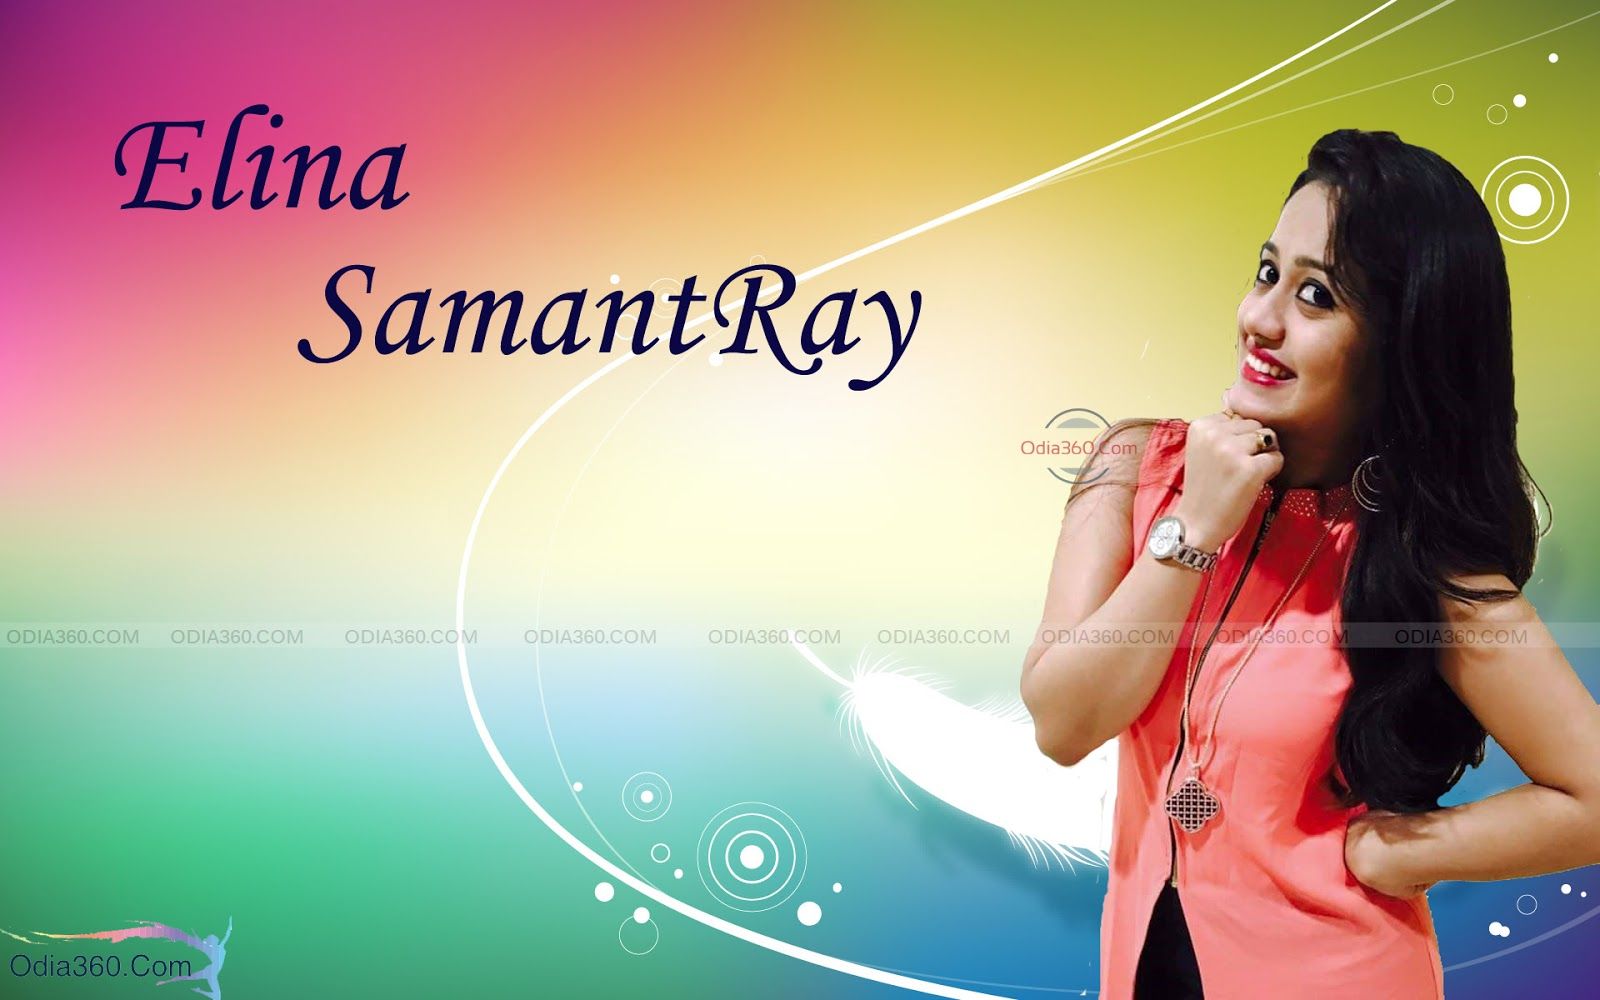 Elina SamantRay Odia Celebrity HD Wallpaper Download.Com, Odisha News, Biography, Odia new movie, Wallpaper, Odia song